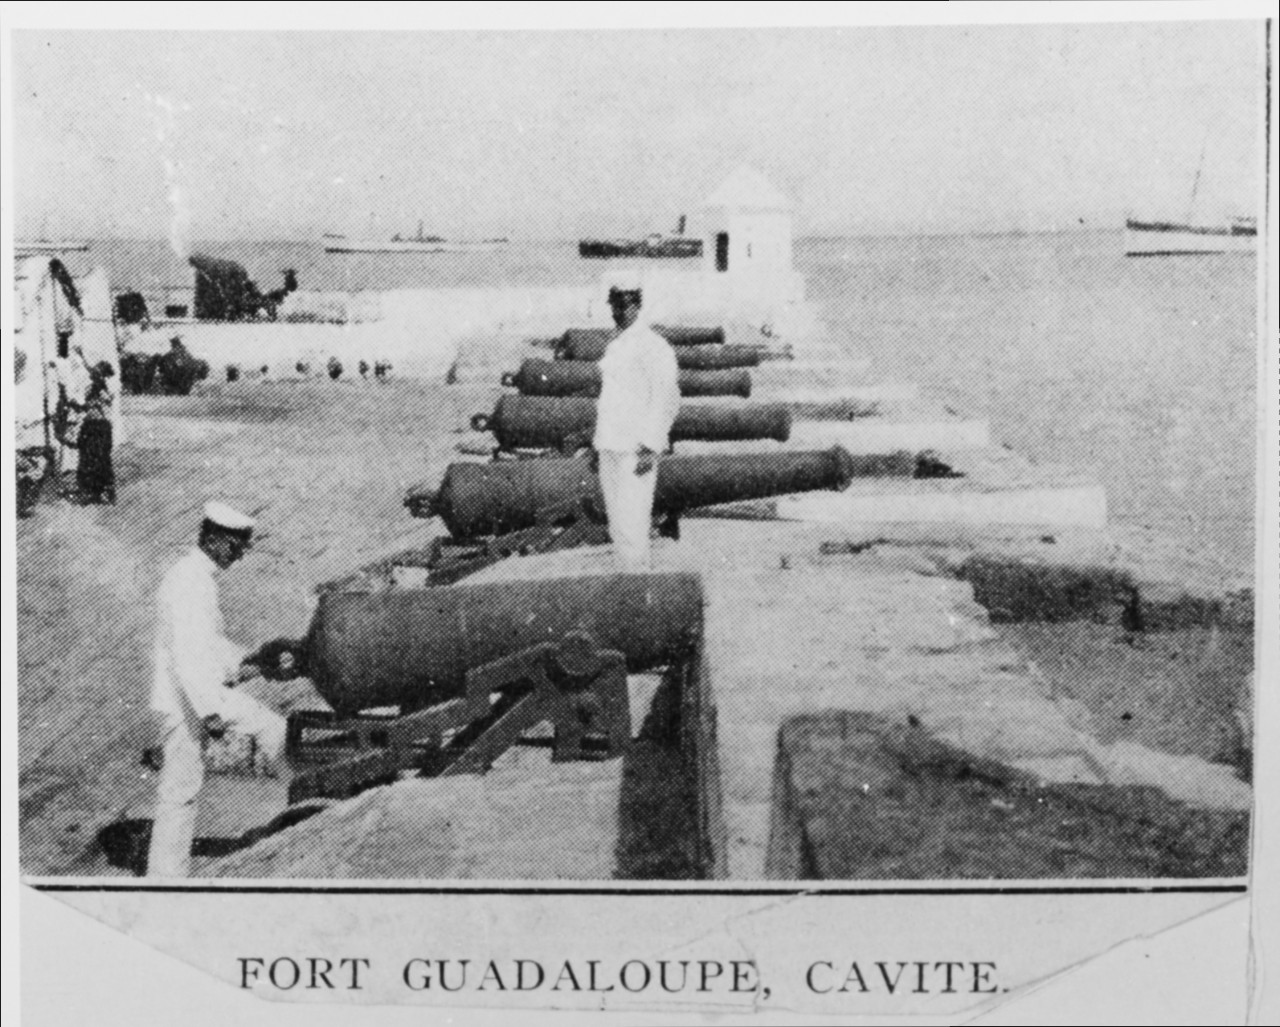 Fort Guadaloupe, Cavite, Philippine Islands